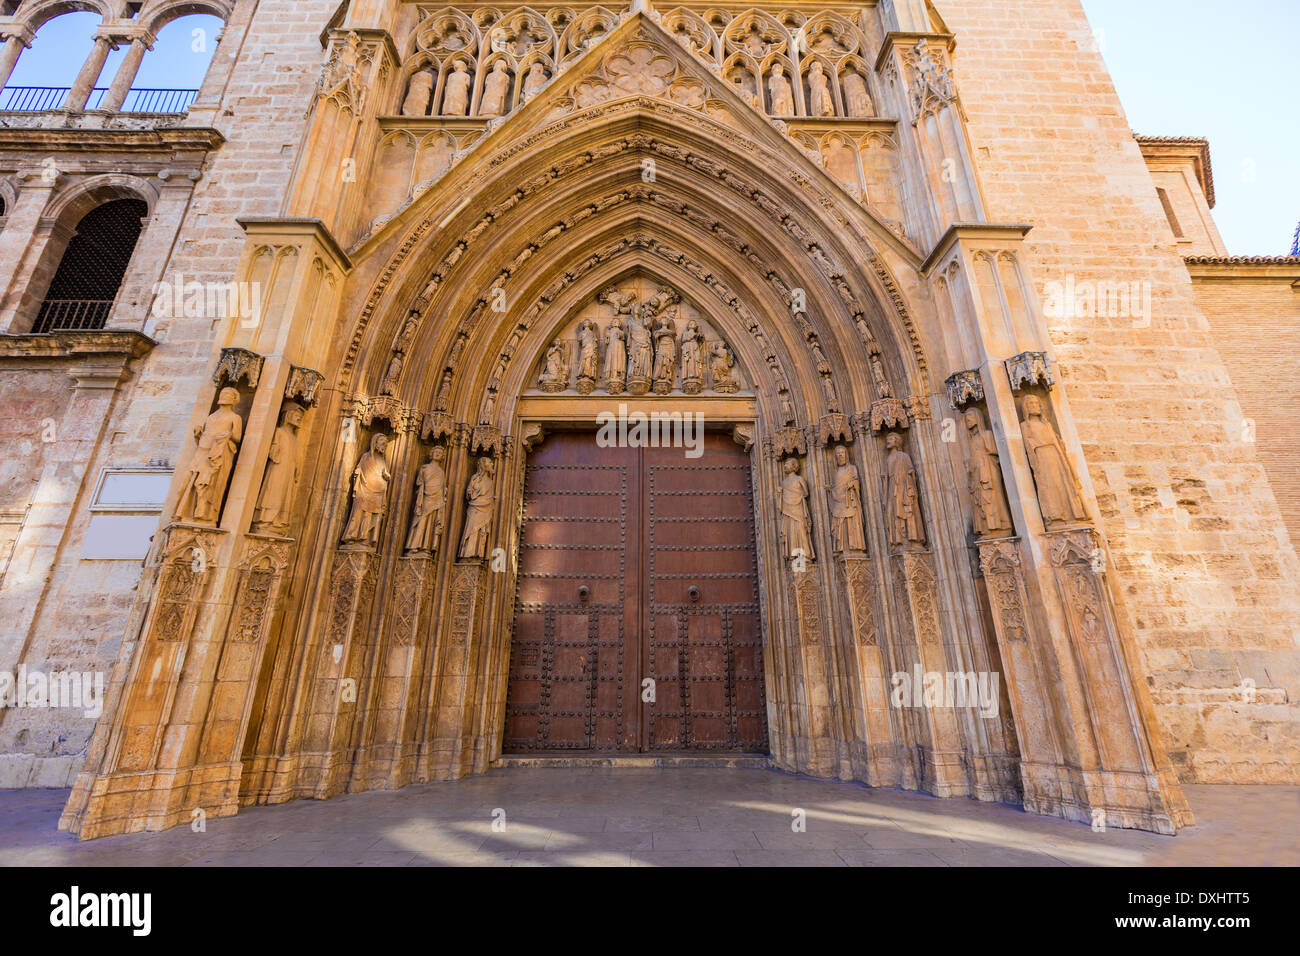 Valencia Kathedrale Apostoles Tür Tribunal de Las Aguas traditionelles Gericht in Spanien trifft Stockfoto